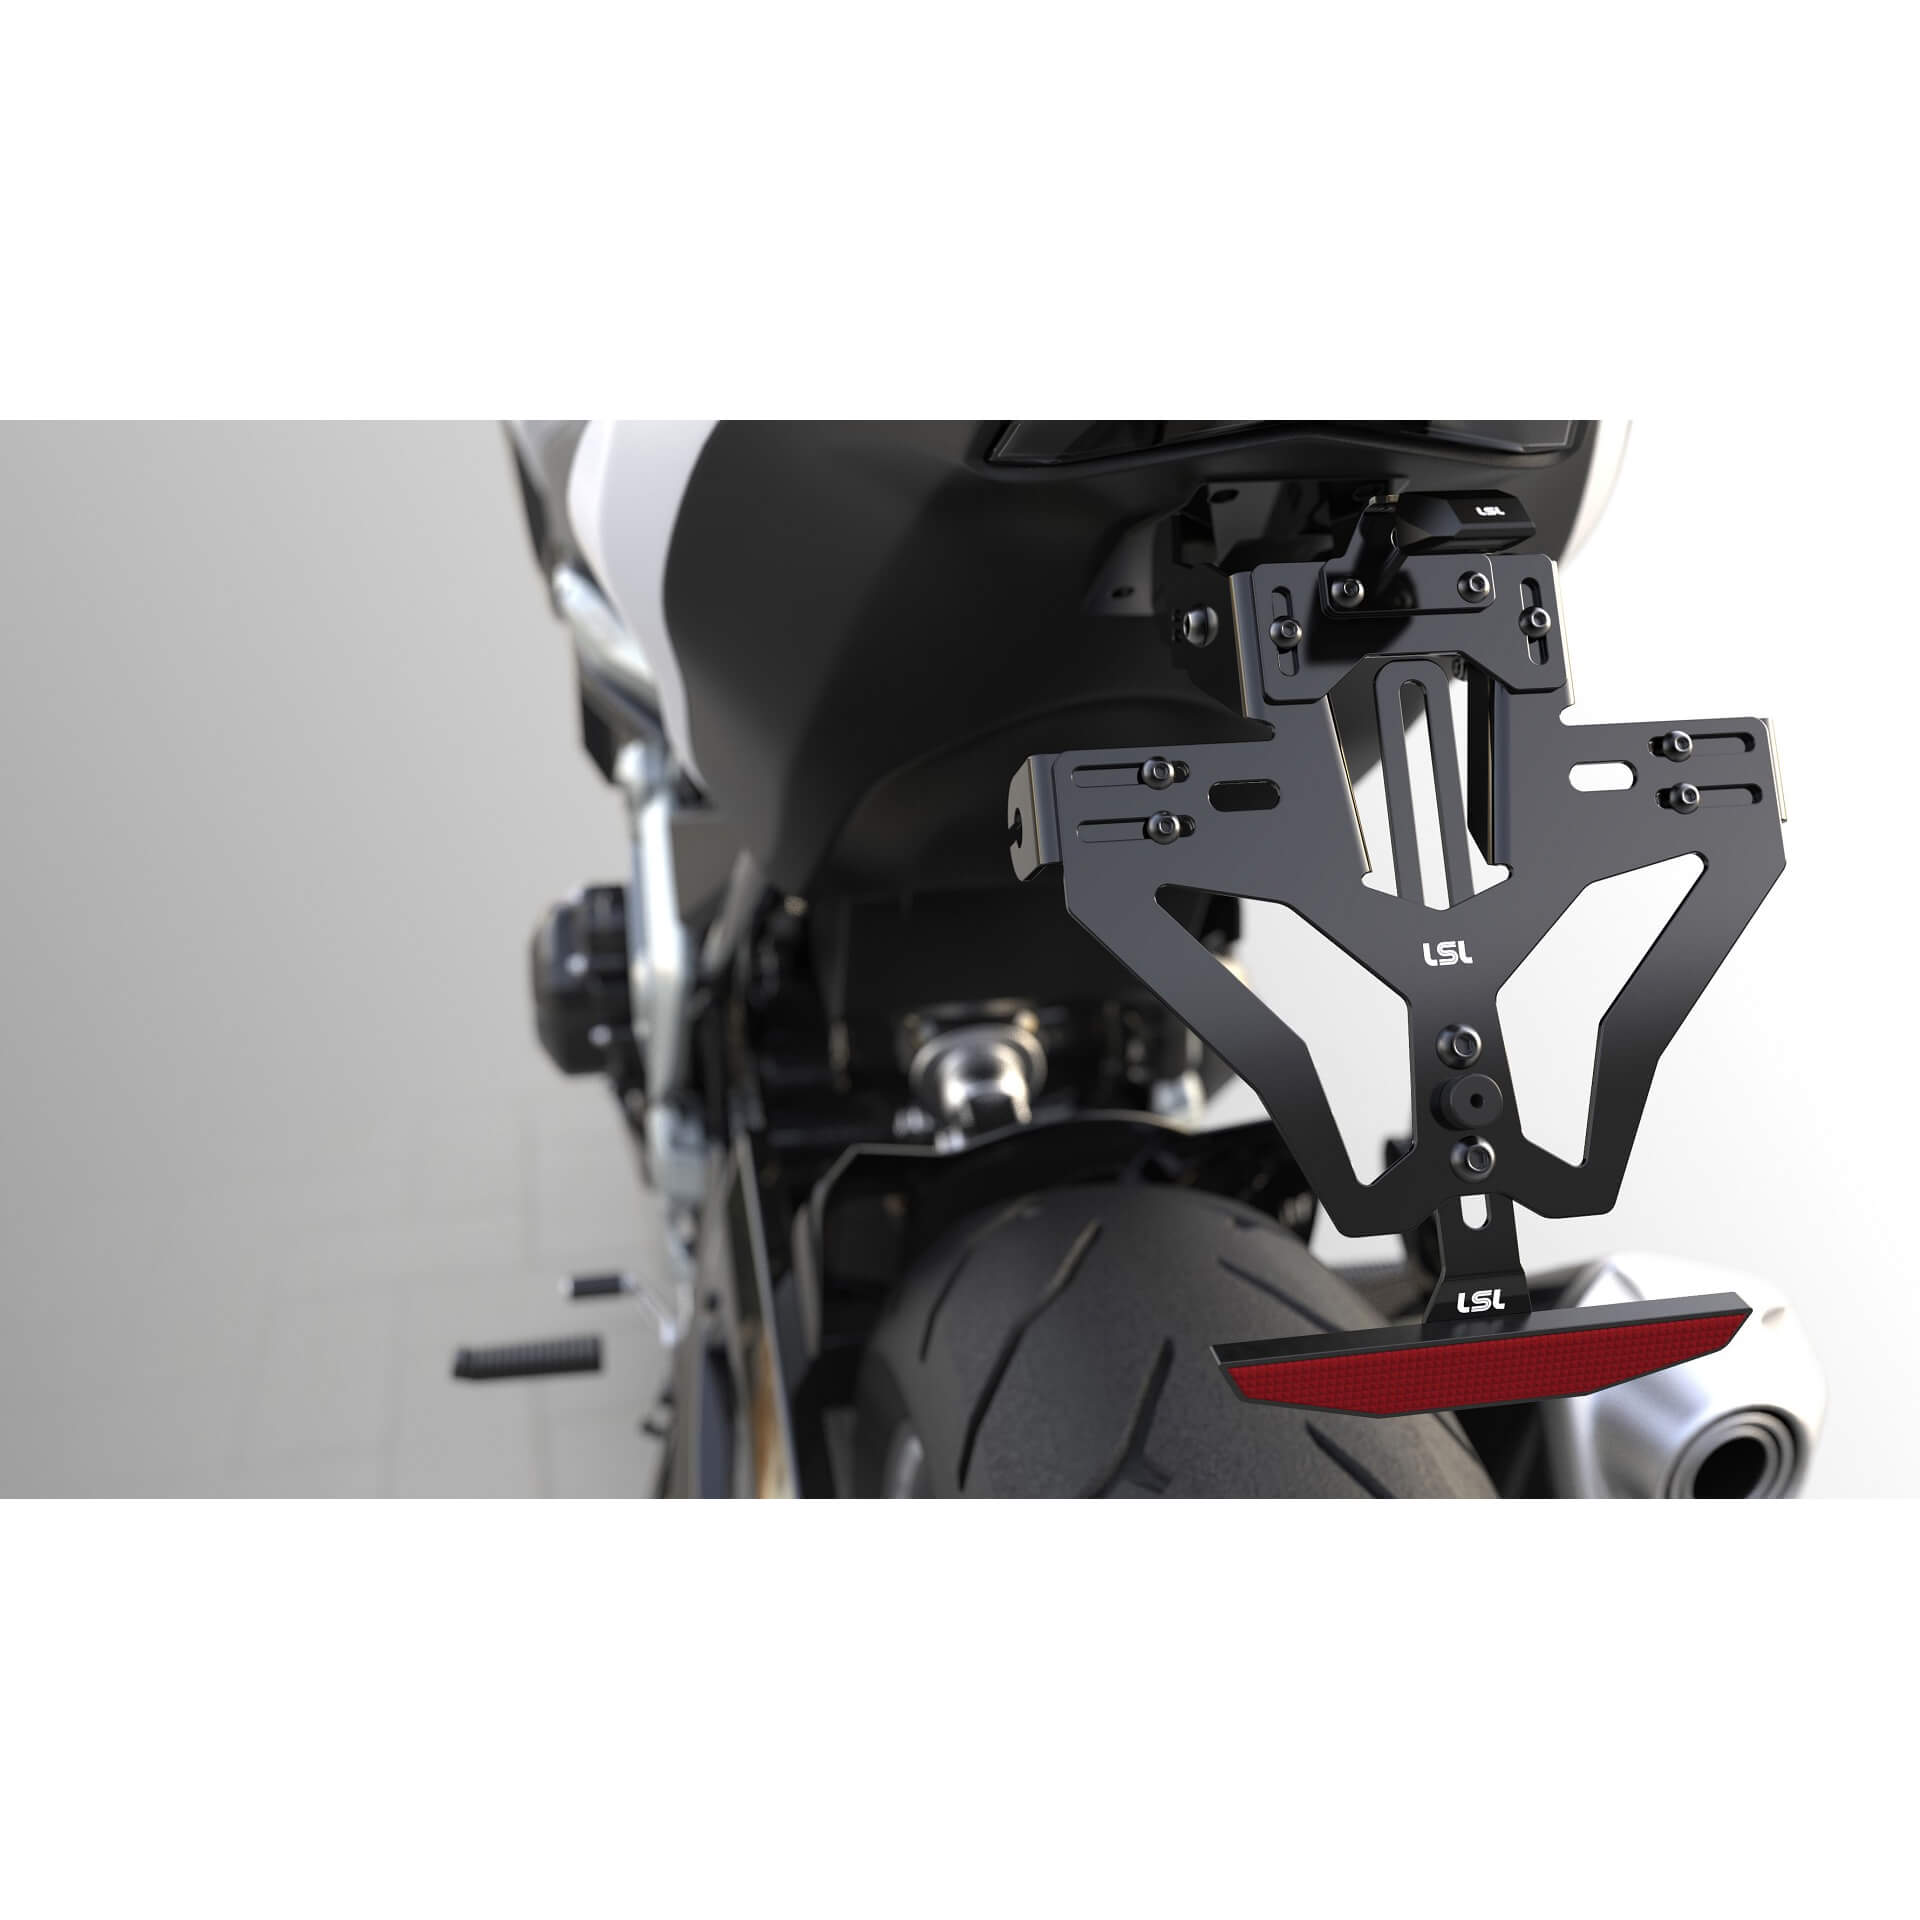 lsl MANTIS-RS PRO for Honda CB 1000 R 18-20, incl. license plate illumination